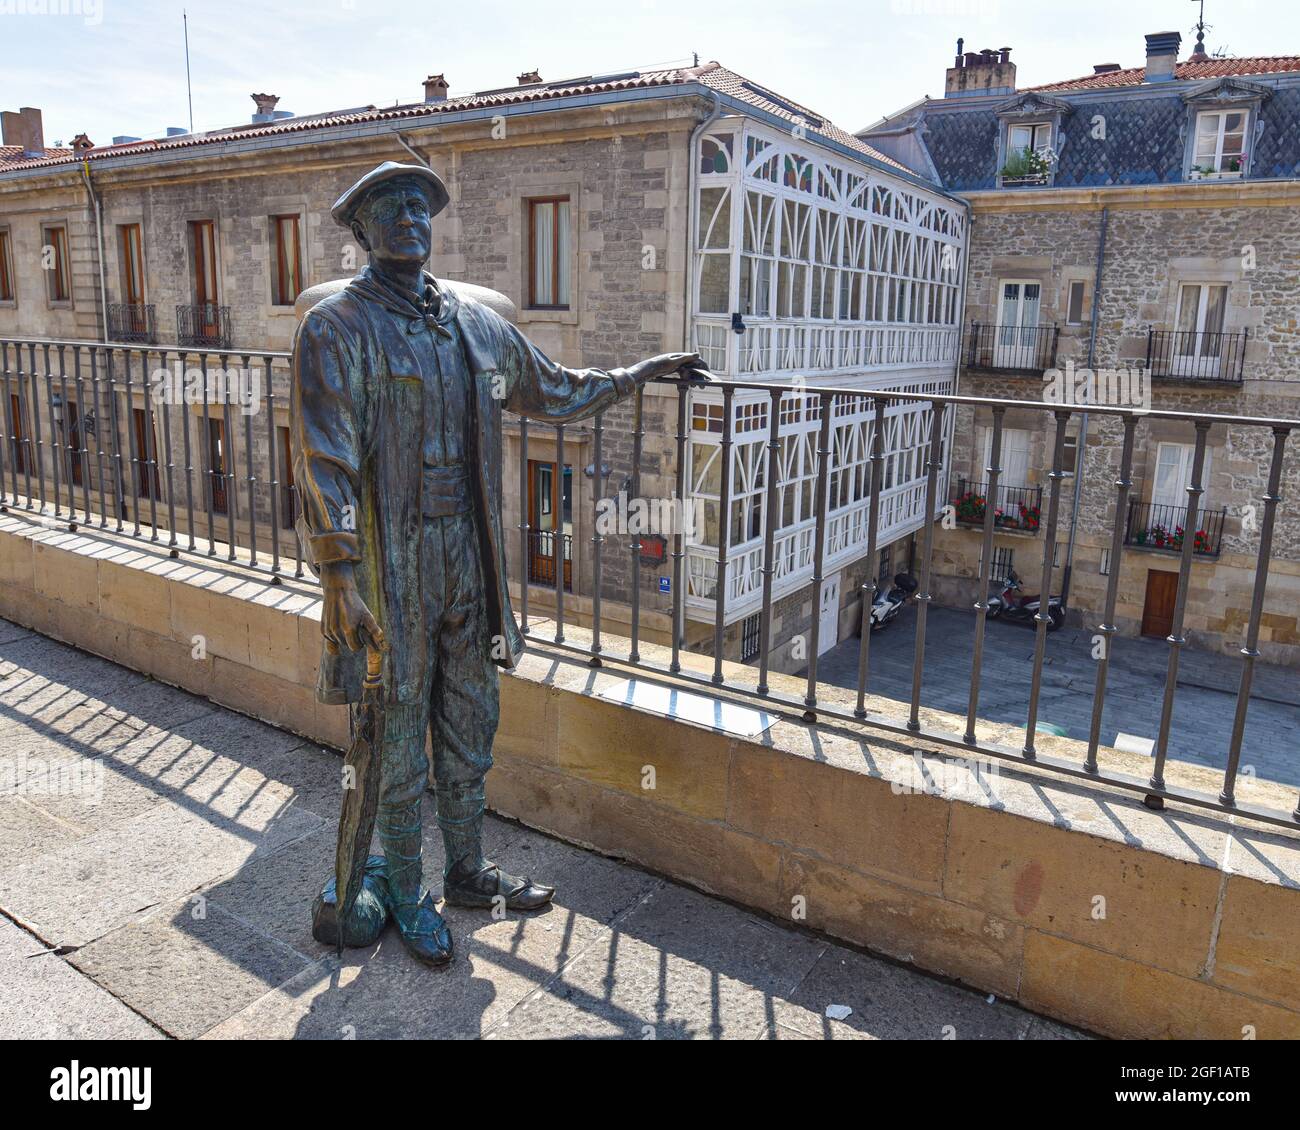 Vitoria Gasteiz, Spain - 21 August 2021: Statue of Celedon overlooking the Plaza of the Virgen Blanca Stock Photo